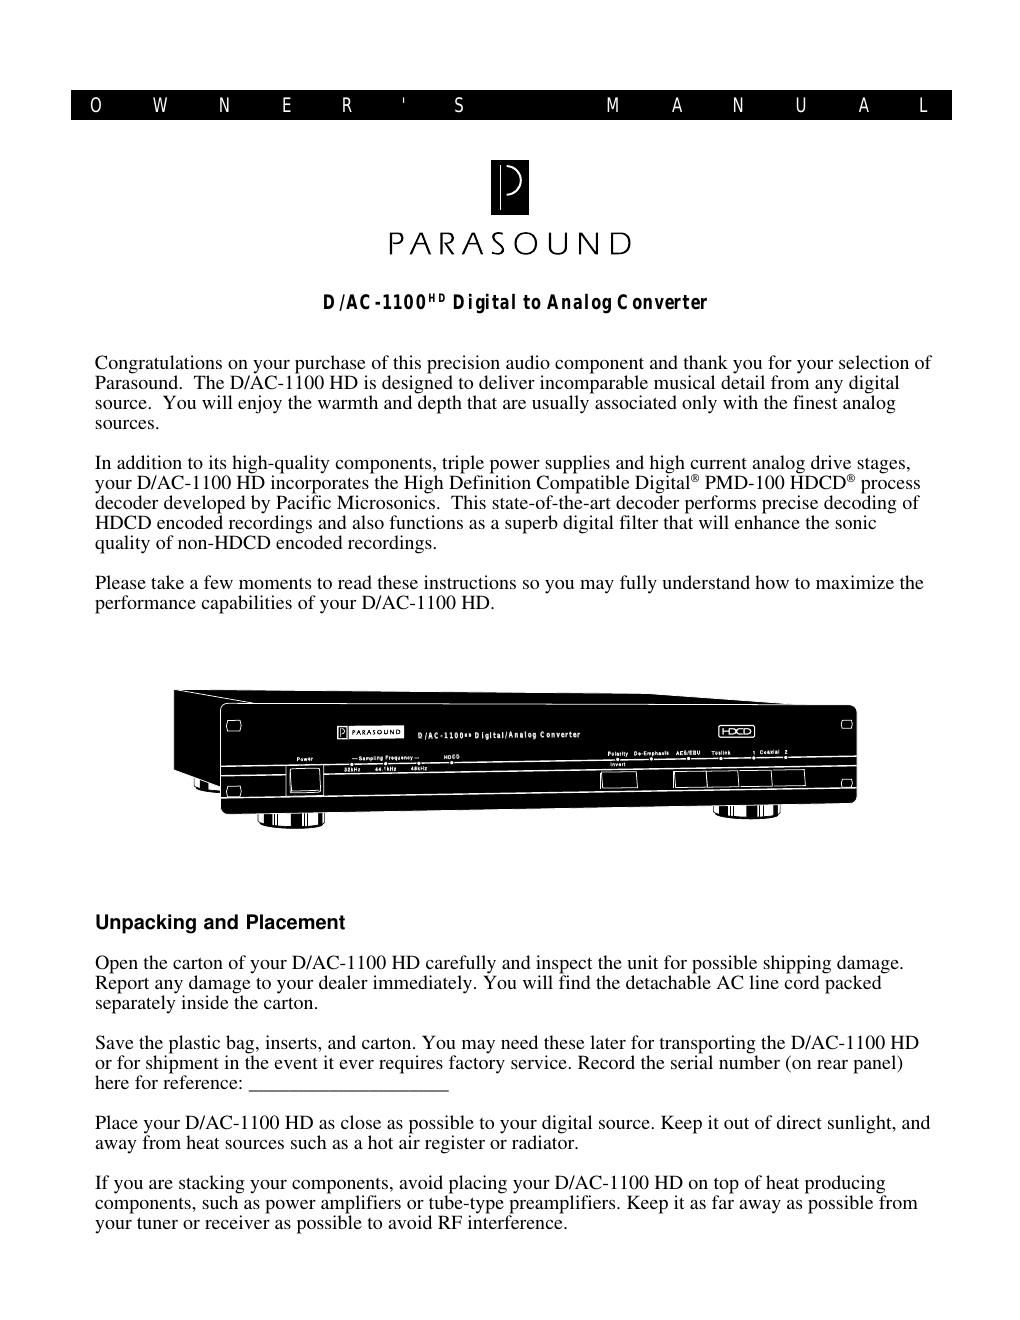 parasound dac 1100 owners manual